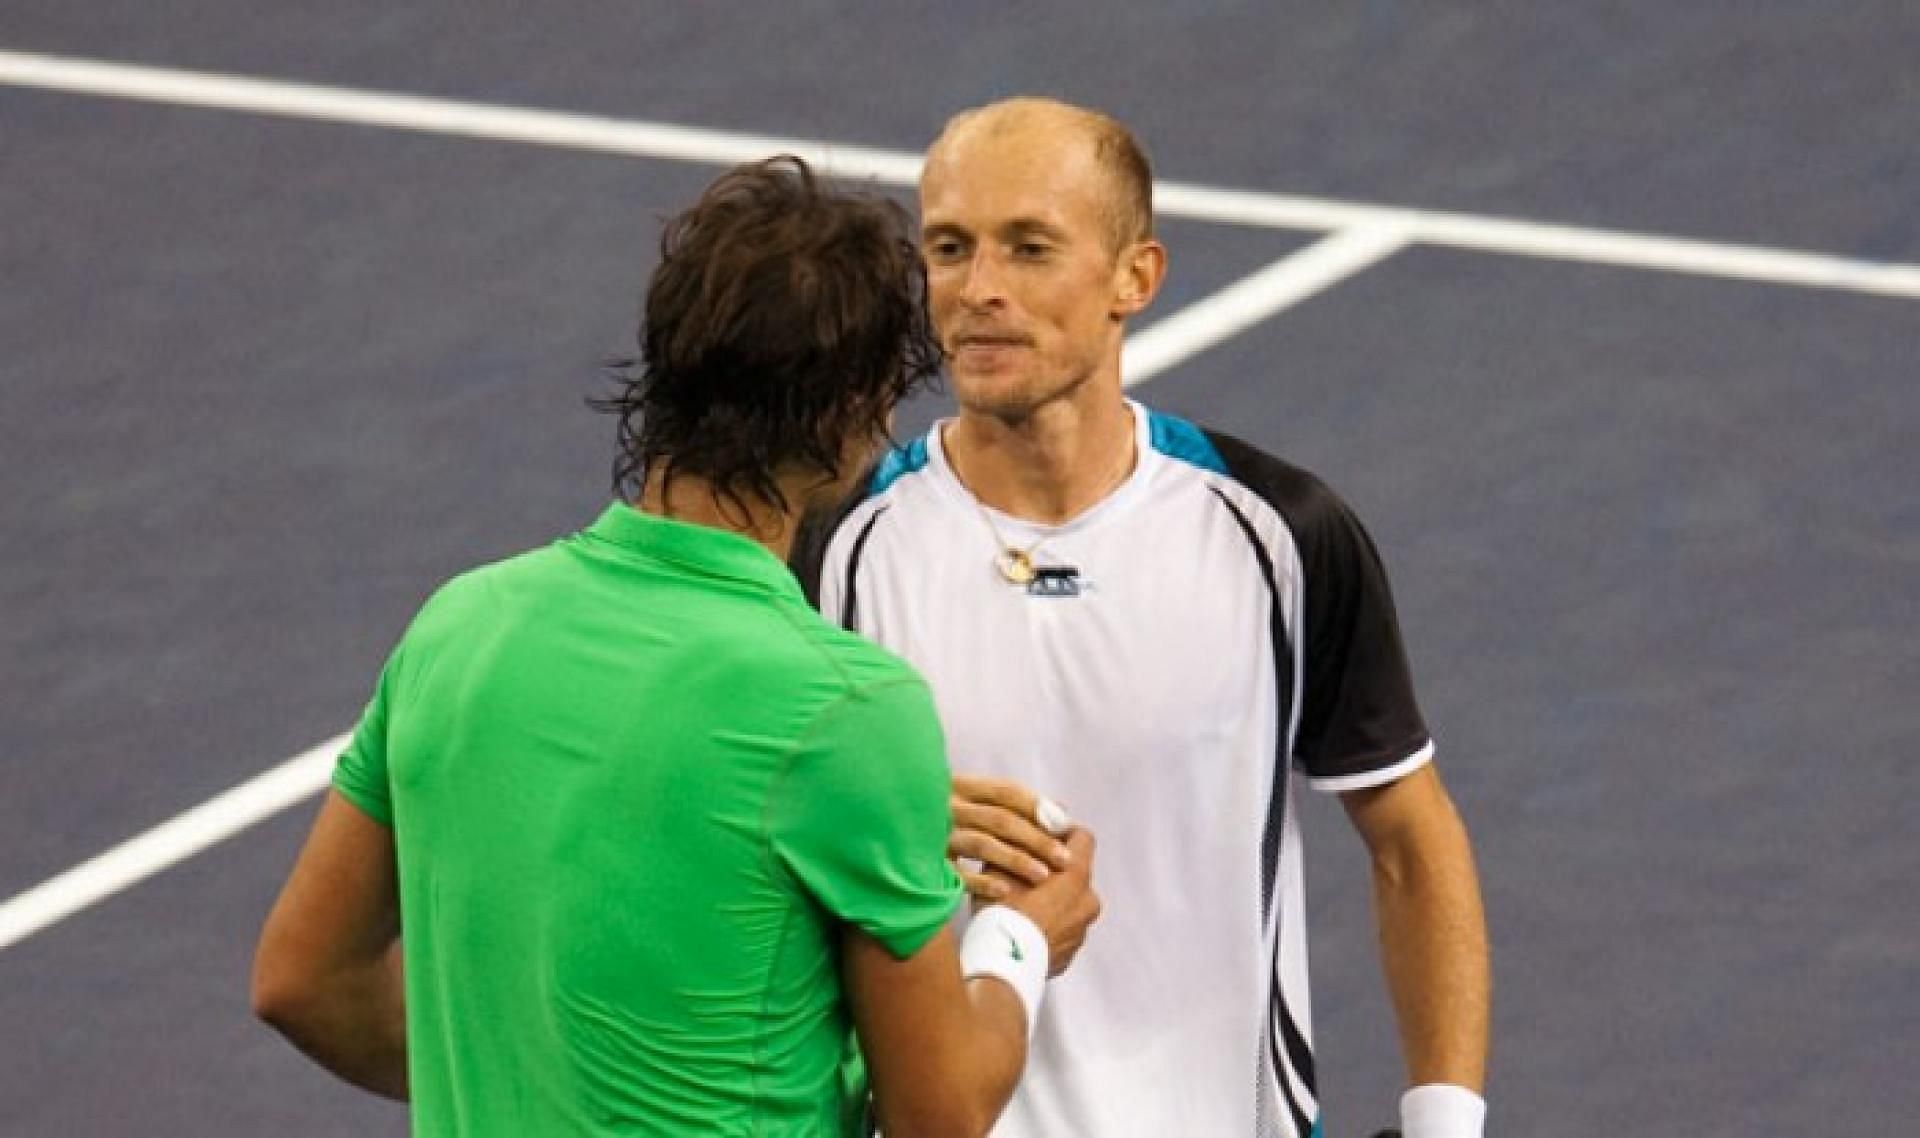 Nikolay Davydenko and Rafael Nadal after a match